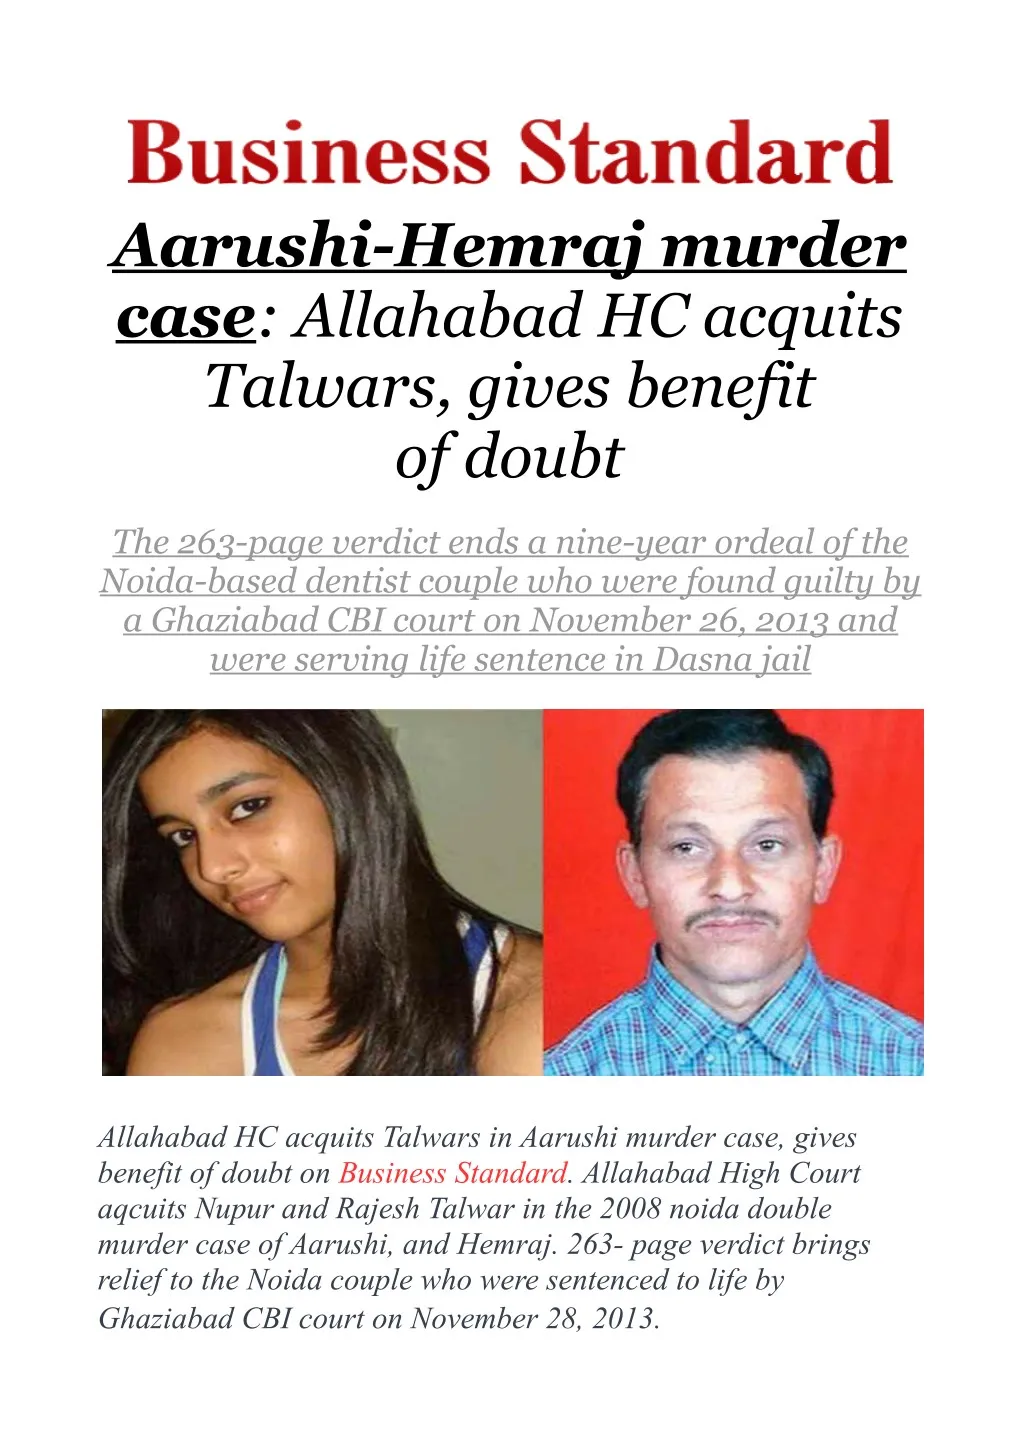 aarushi hemraj murder case allahabad hc acquits